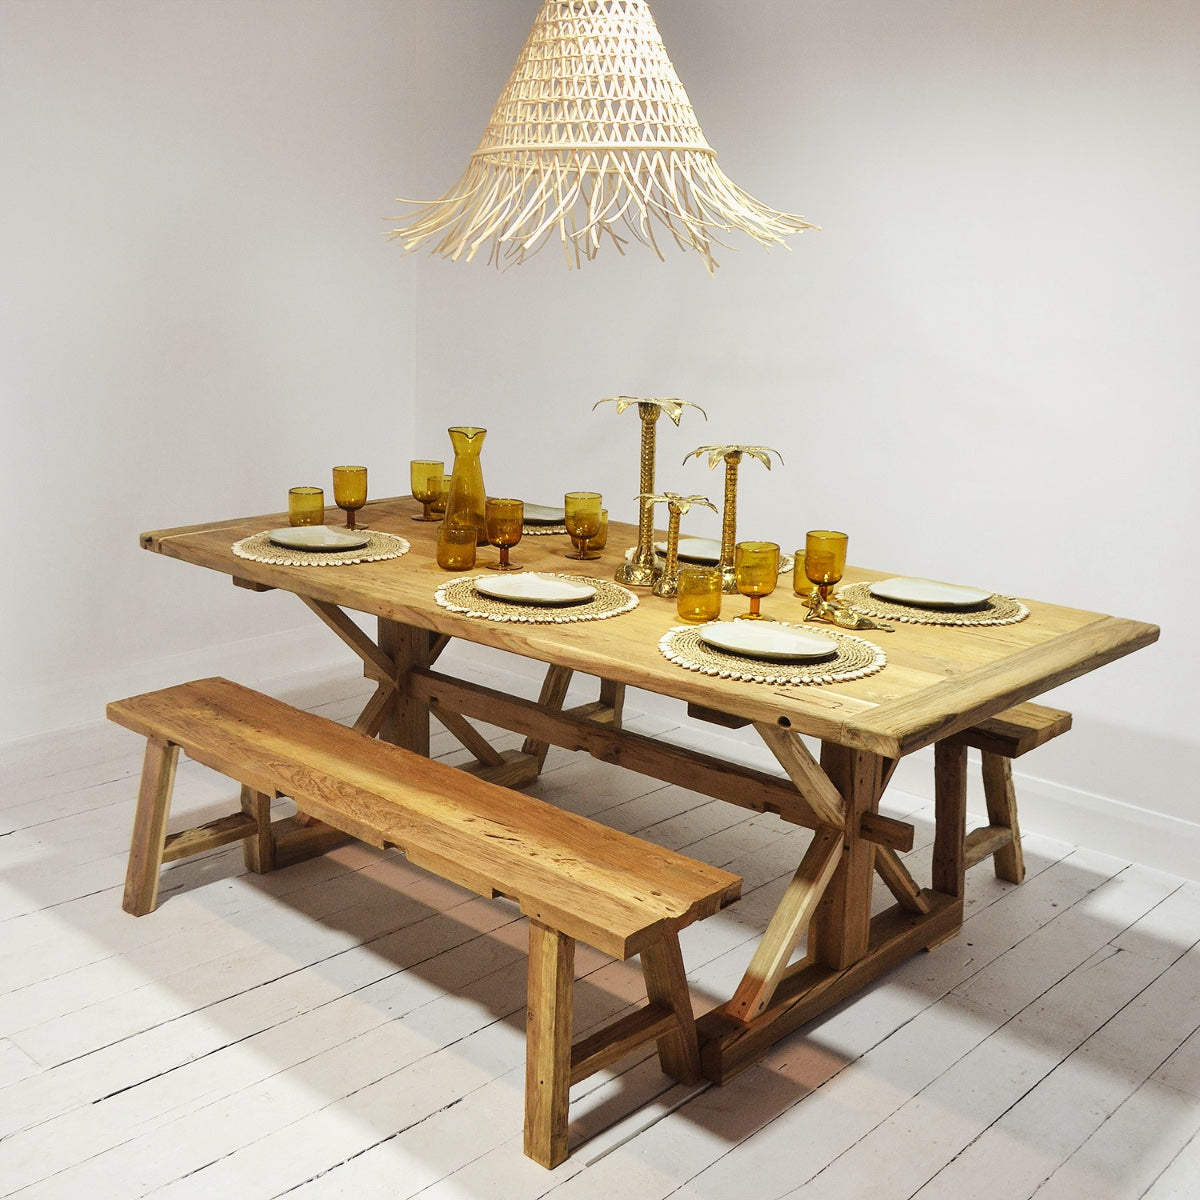 Teak Timber Cross Leg Dining Table 2.5m x 1m